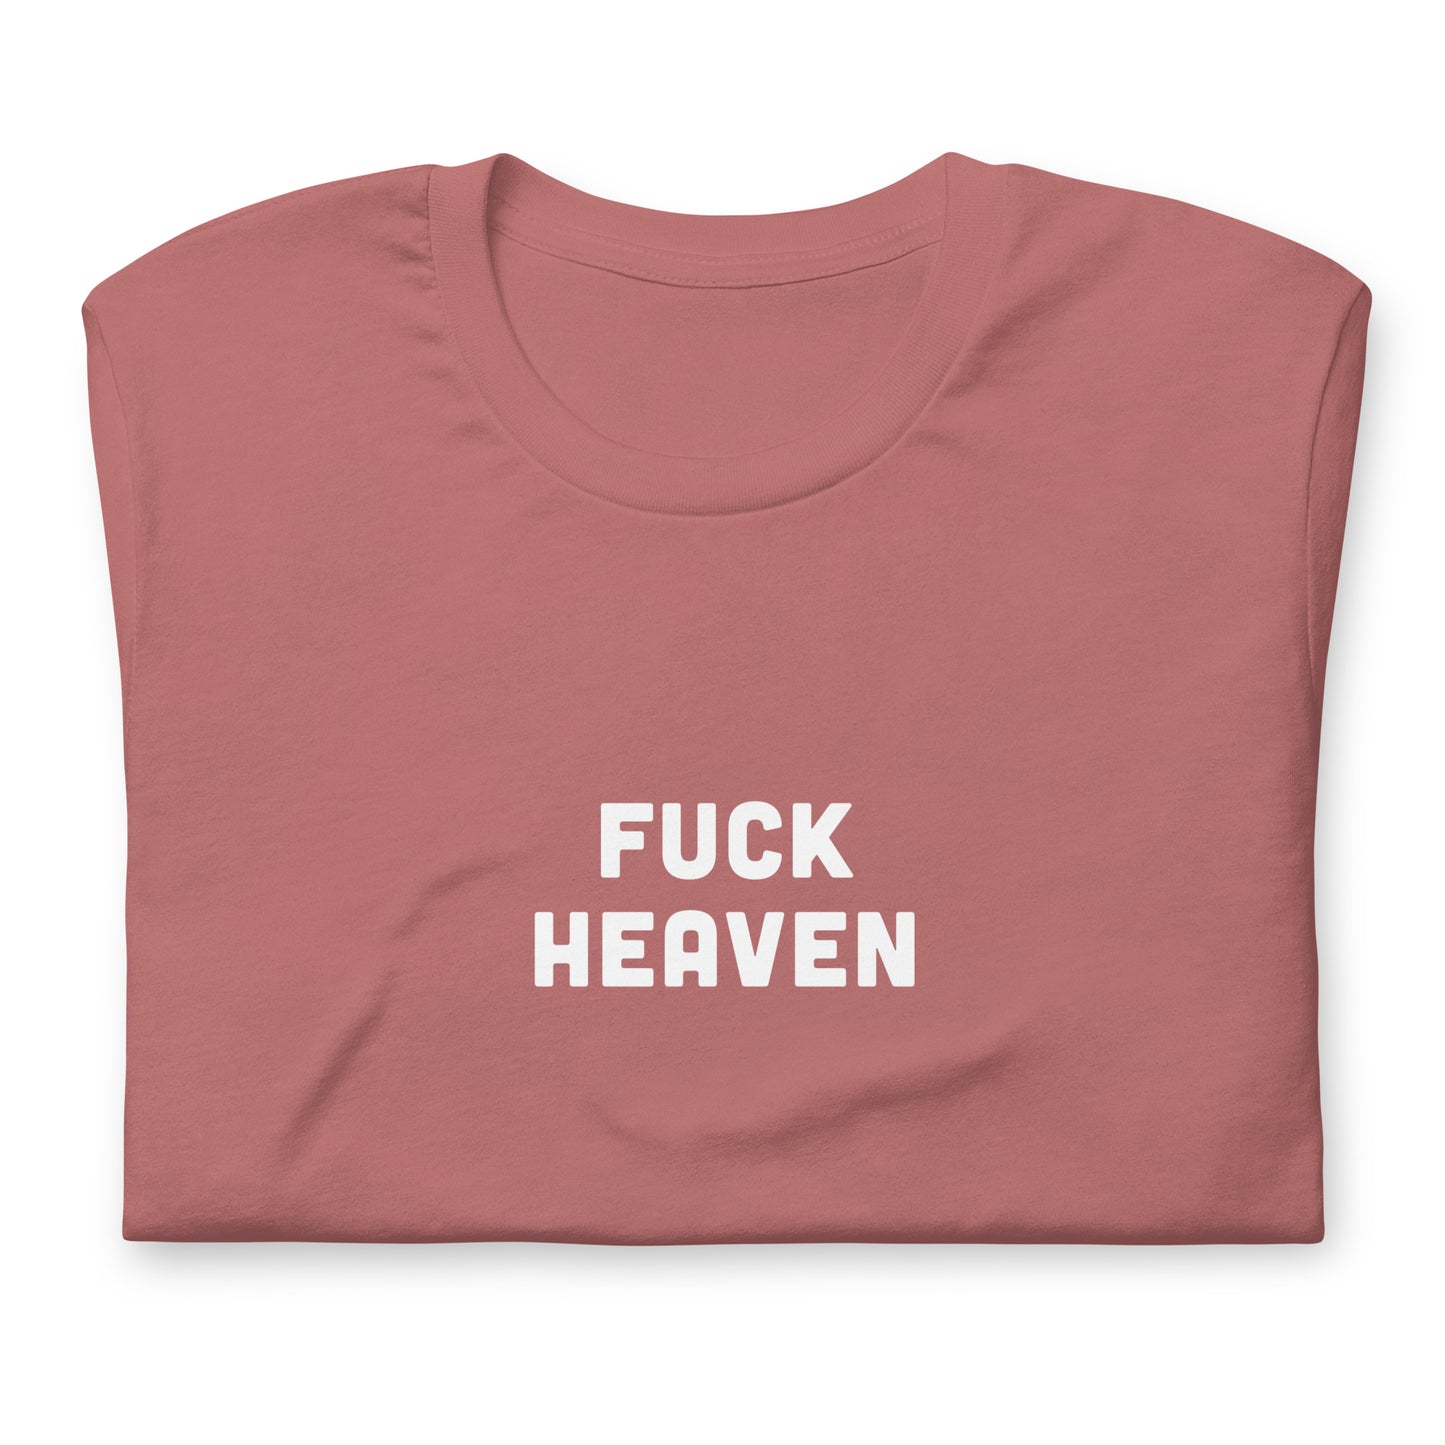 Fuck Heaven T-Shirt Size S Color Forest